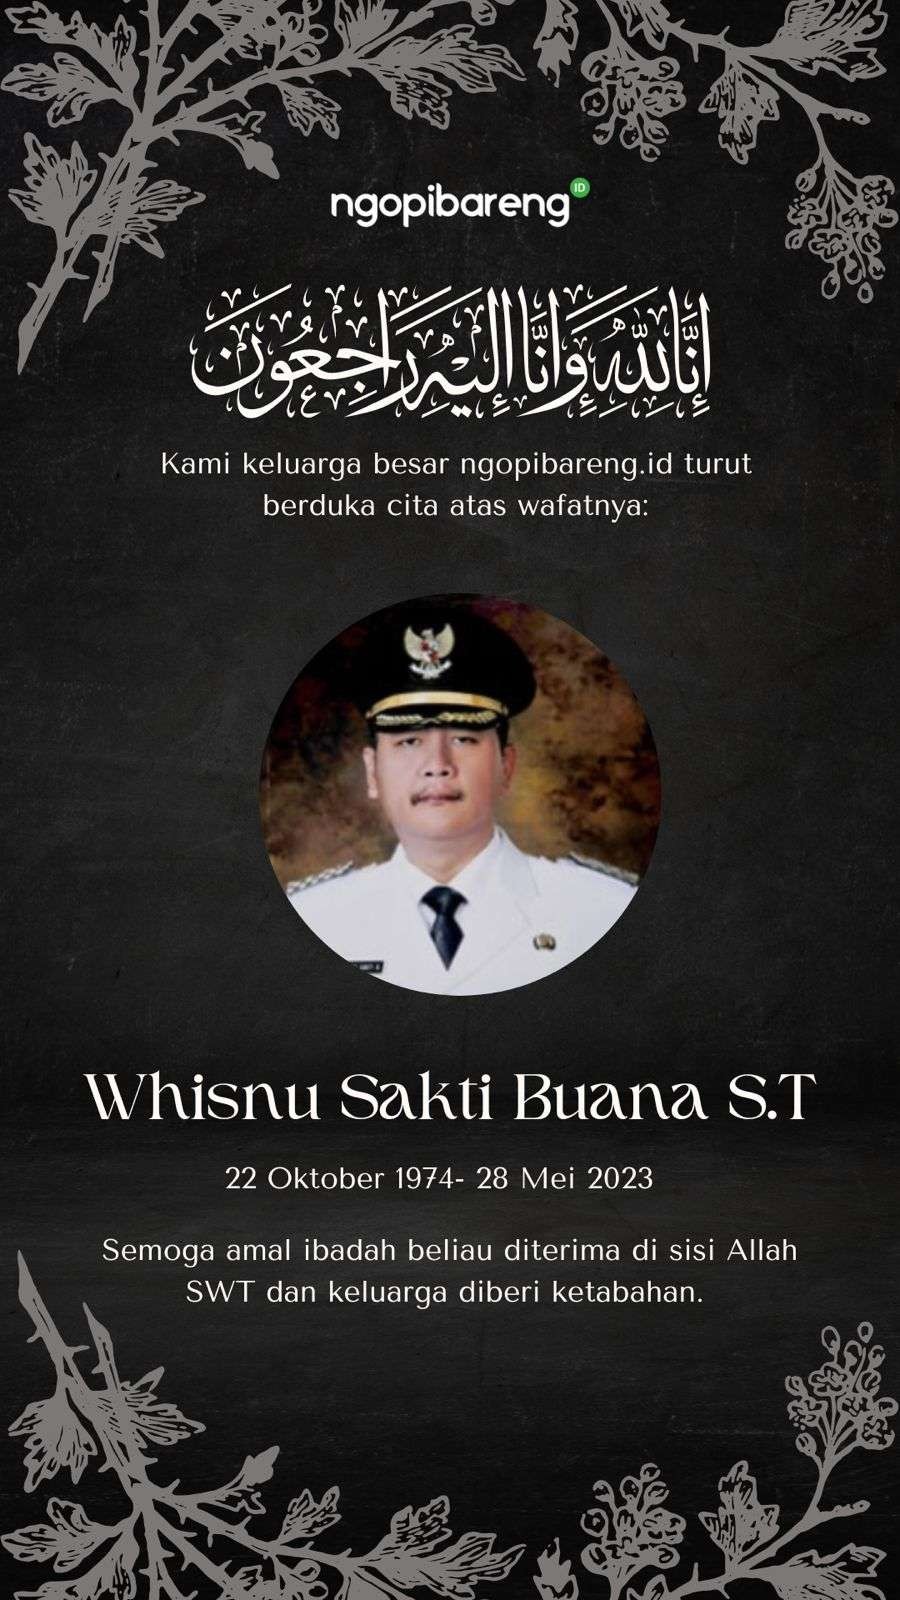 Whisnu Sakti Buana, mantan Walikota Surabaya meninggal dunia. (Foto: Istimewa)